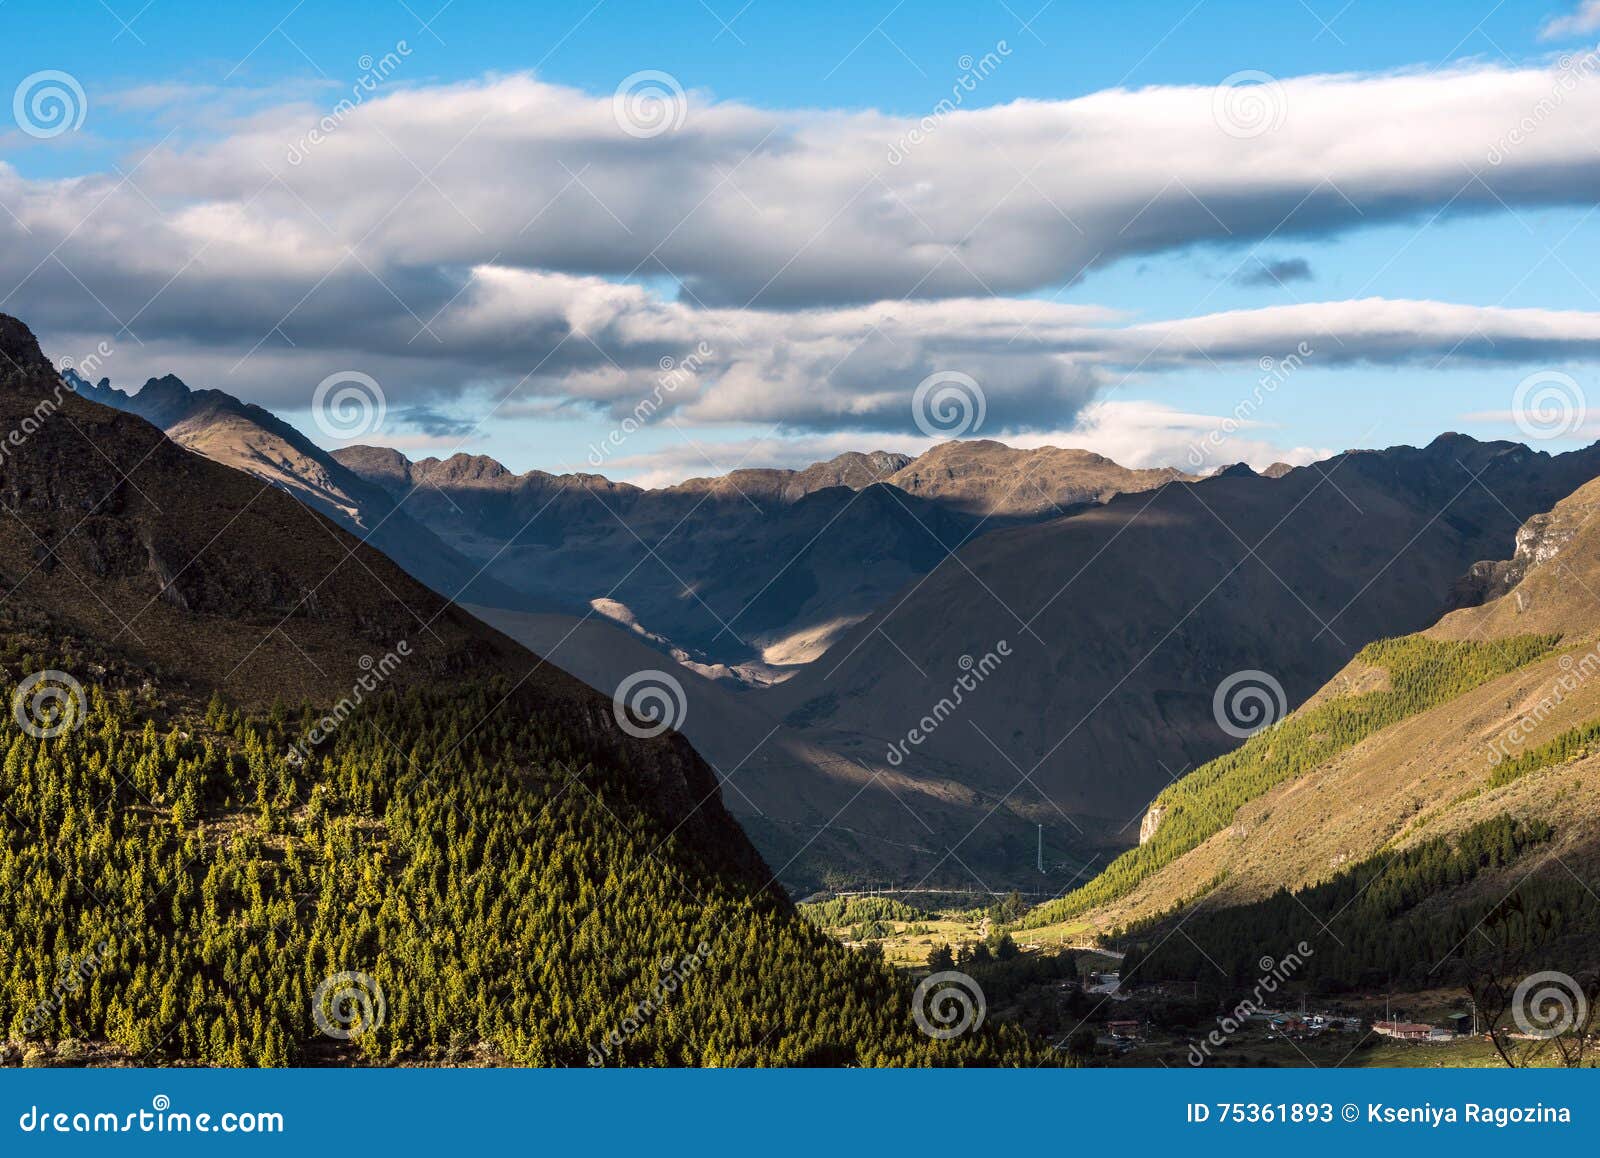 cajas national park, andean highlands, ecuador